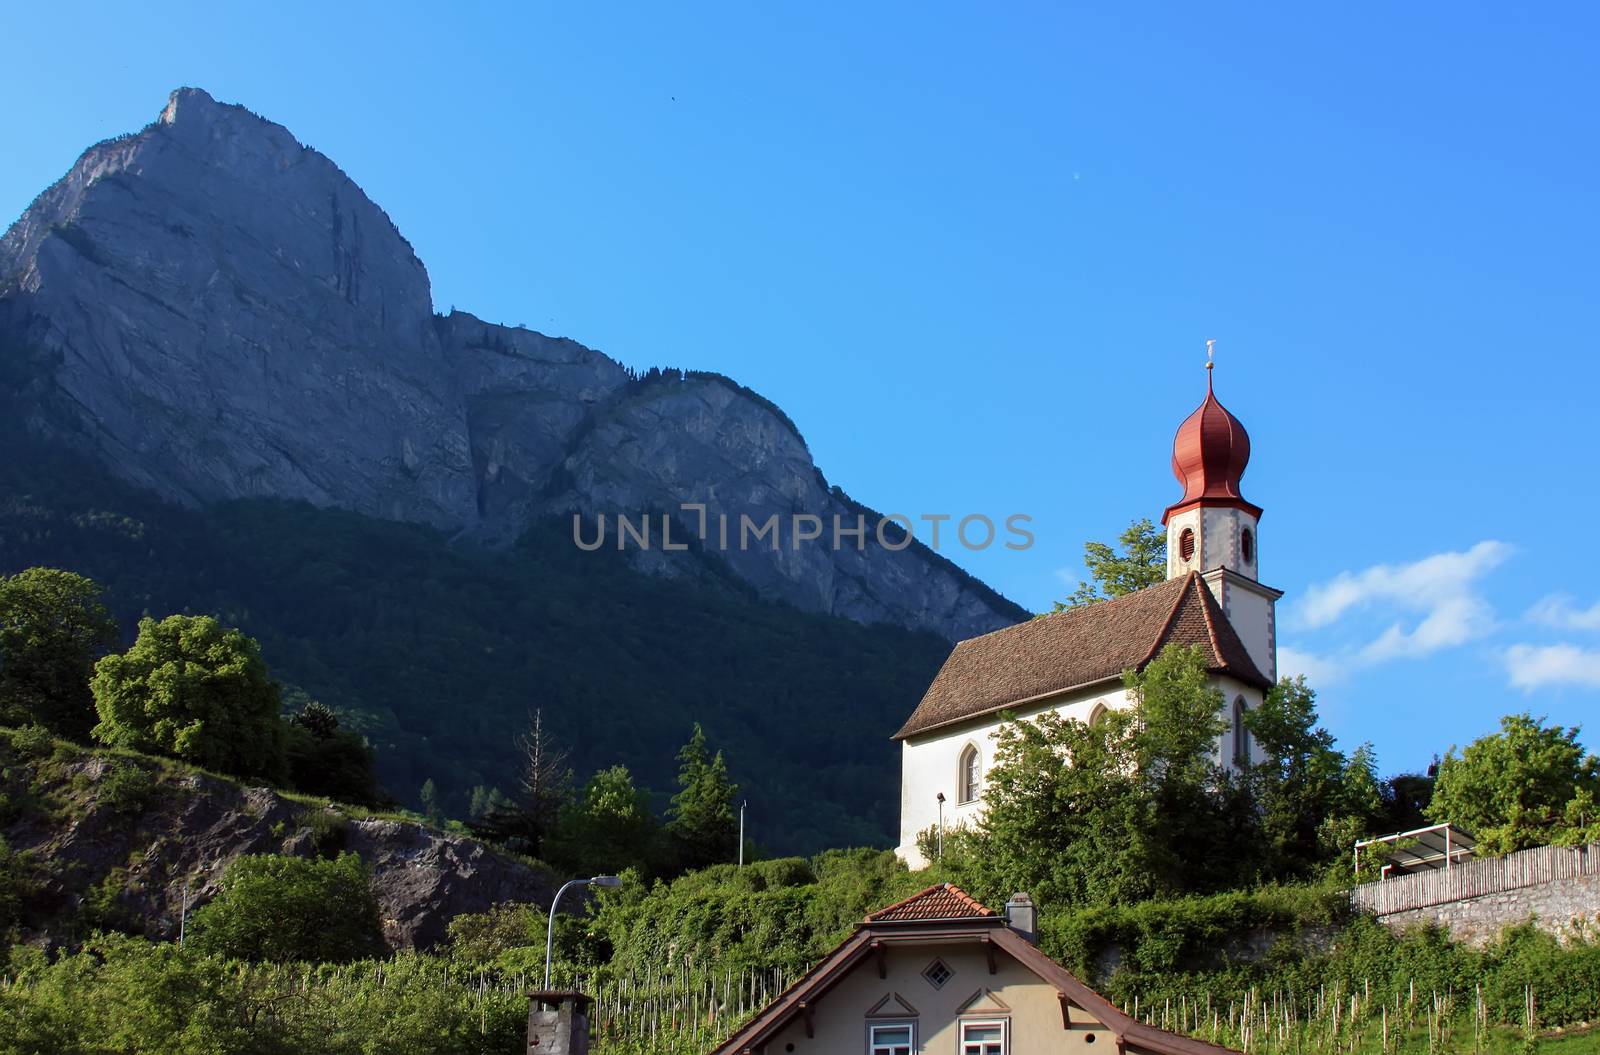 Church and mountain, Switzerland by borisb17